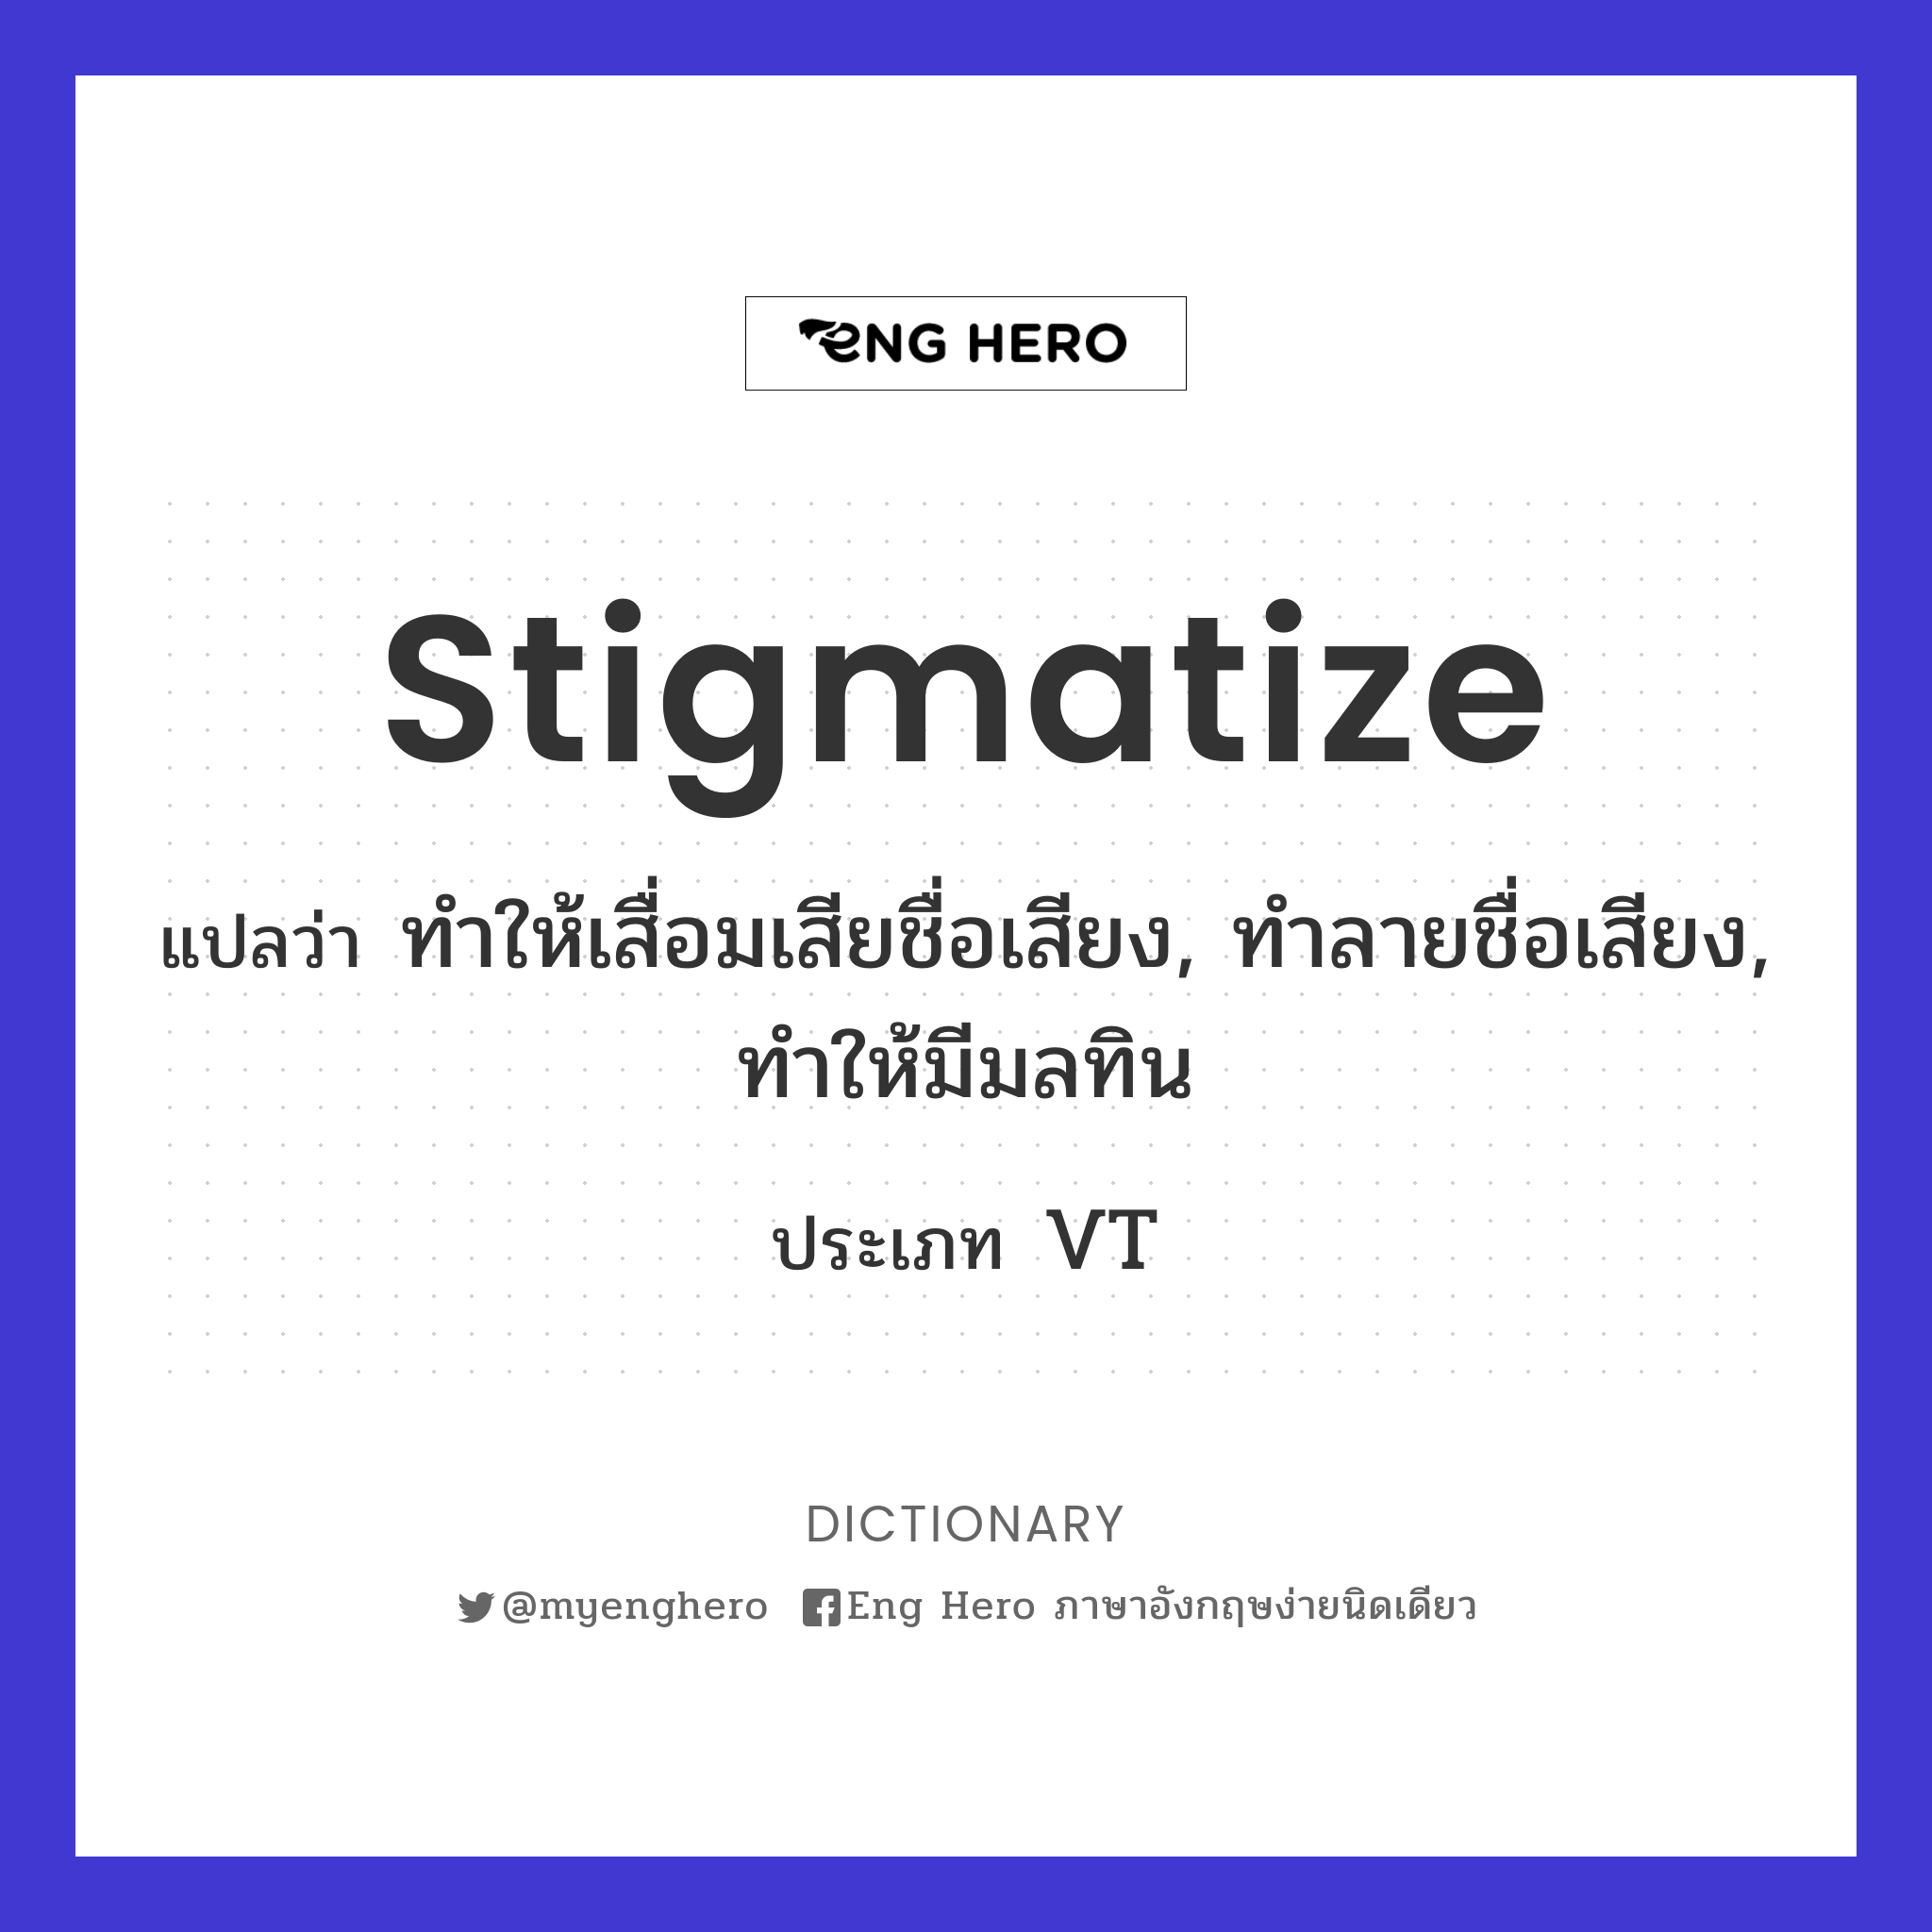 stigmatize